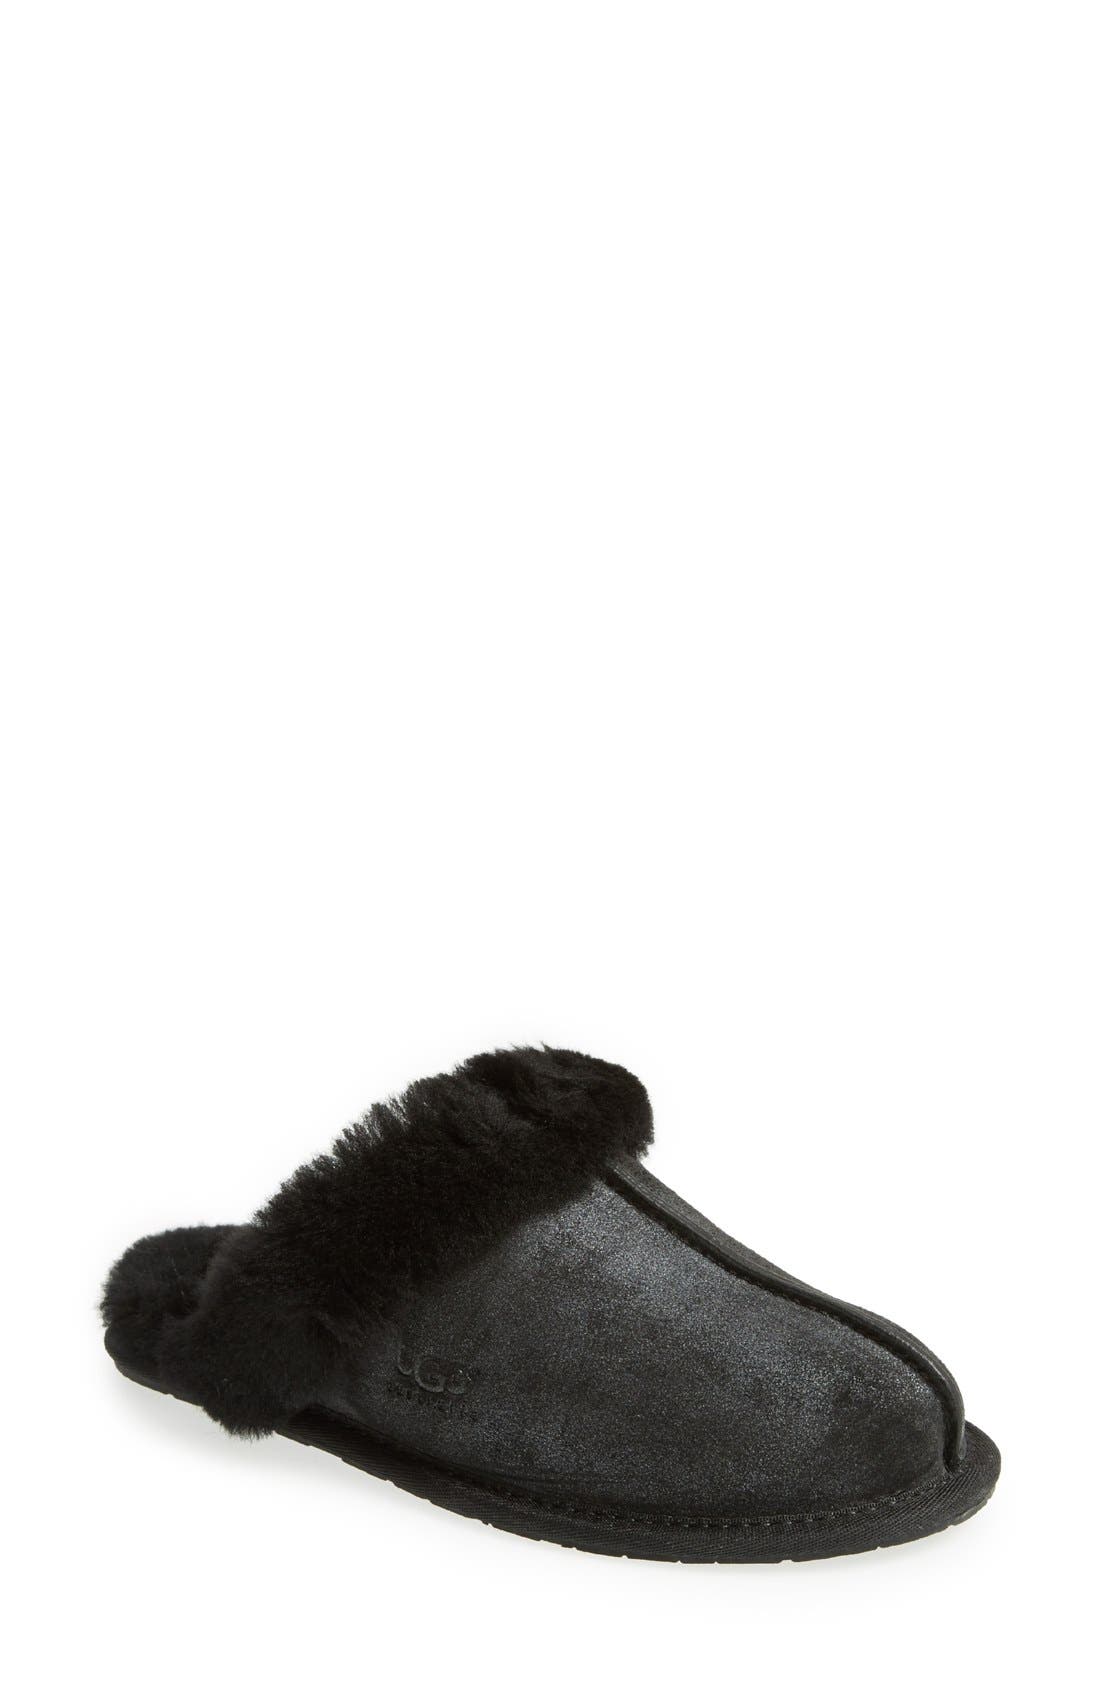 nordstrom uggs slippers